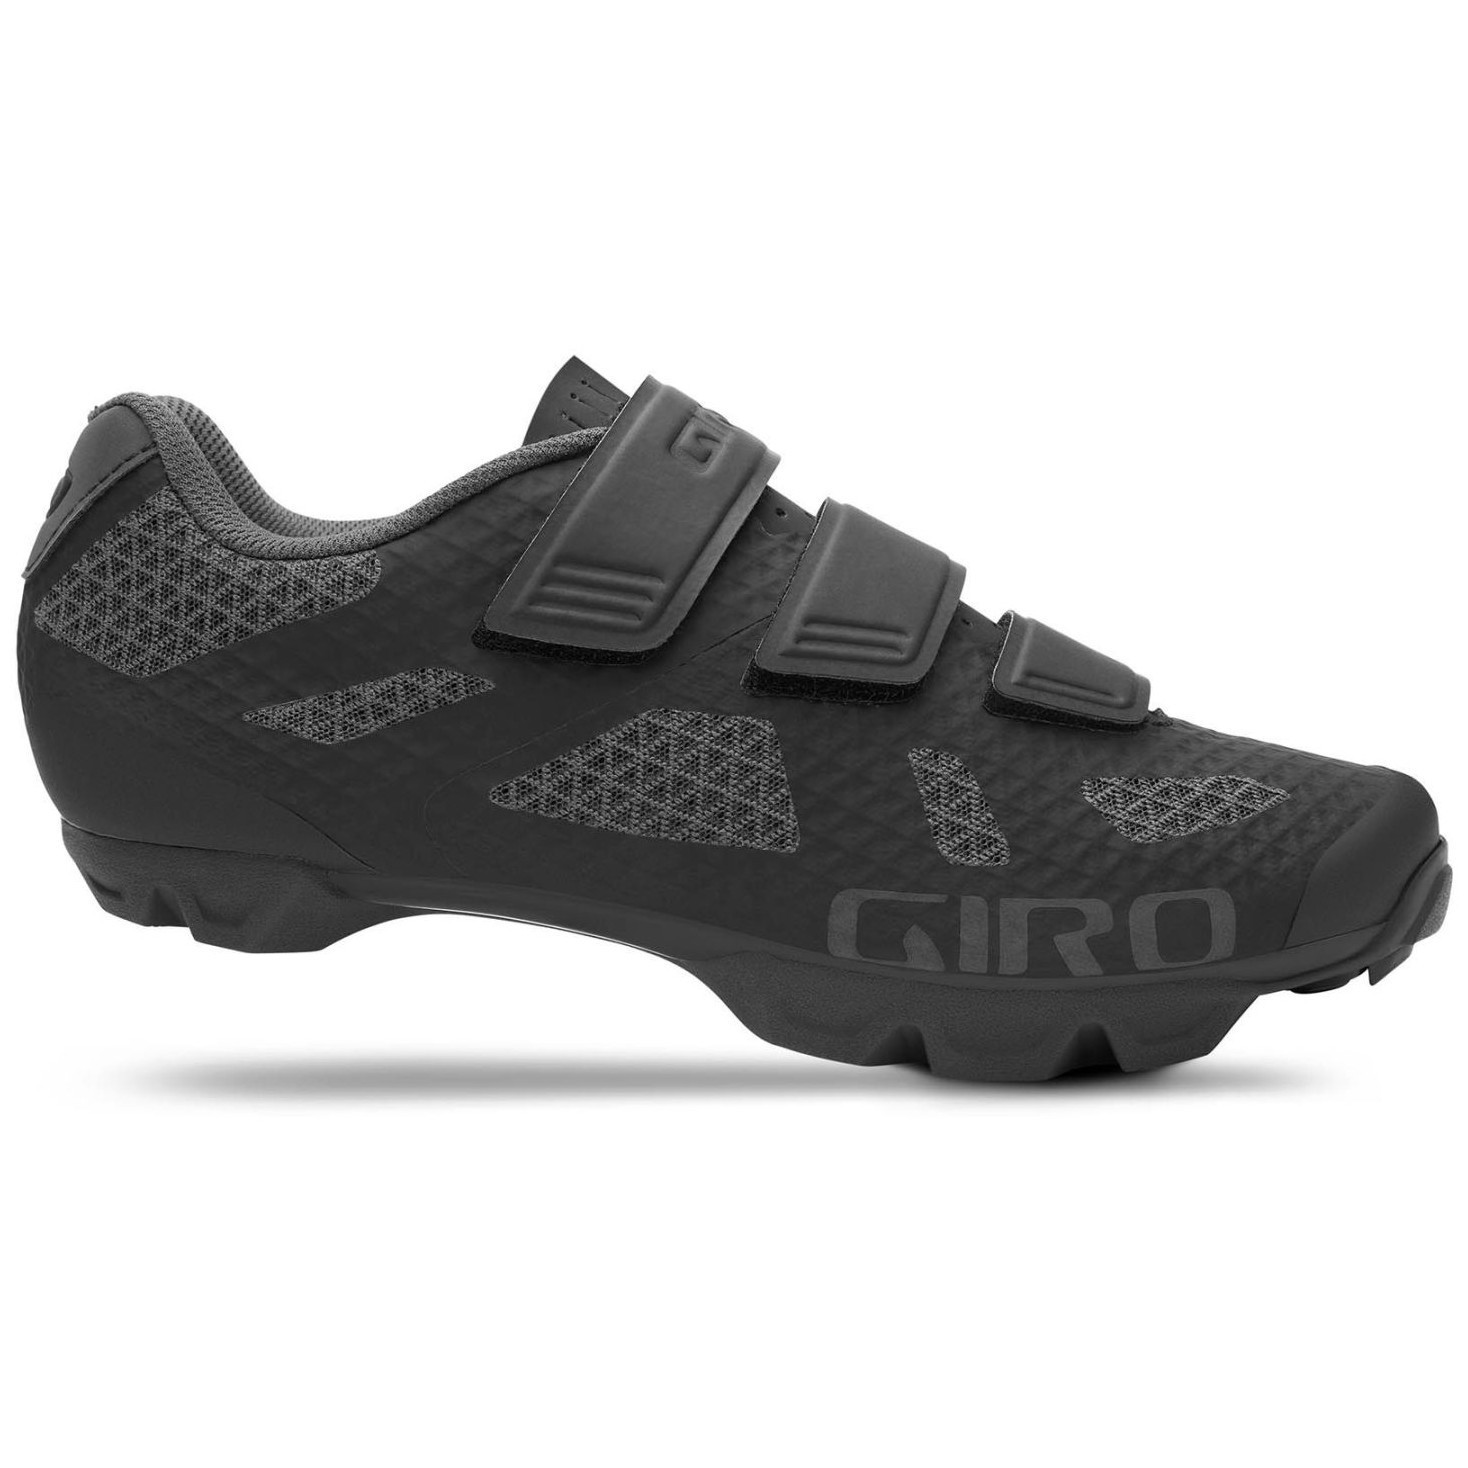 Dámské cyklistické tretry Giro Ranger W Velikost bot (EU): 40 / Barva: černá